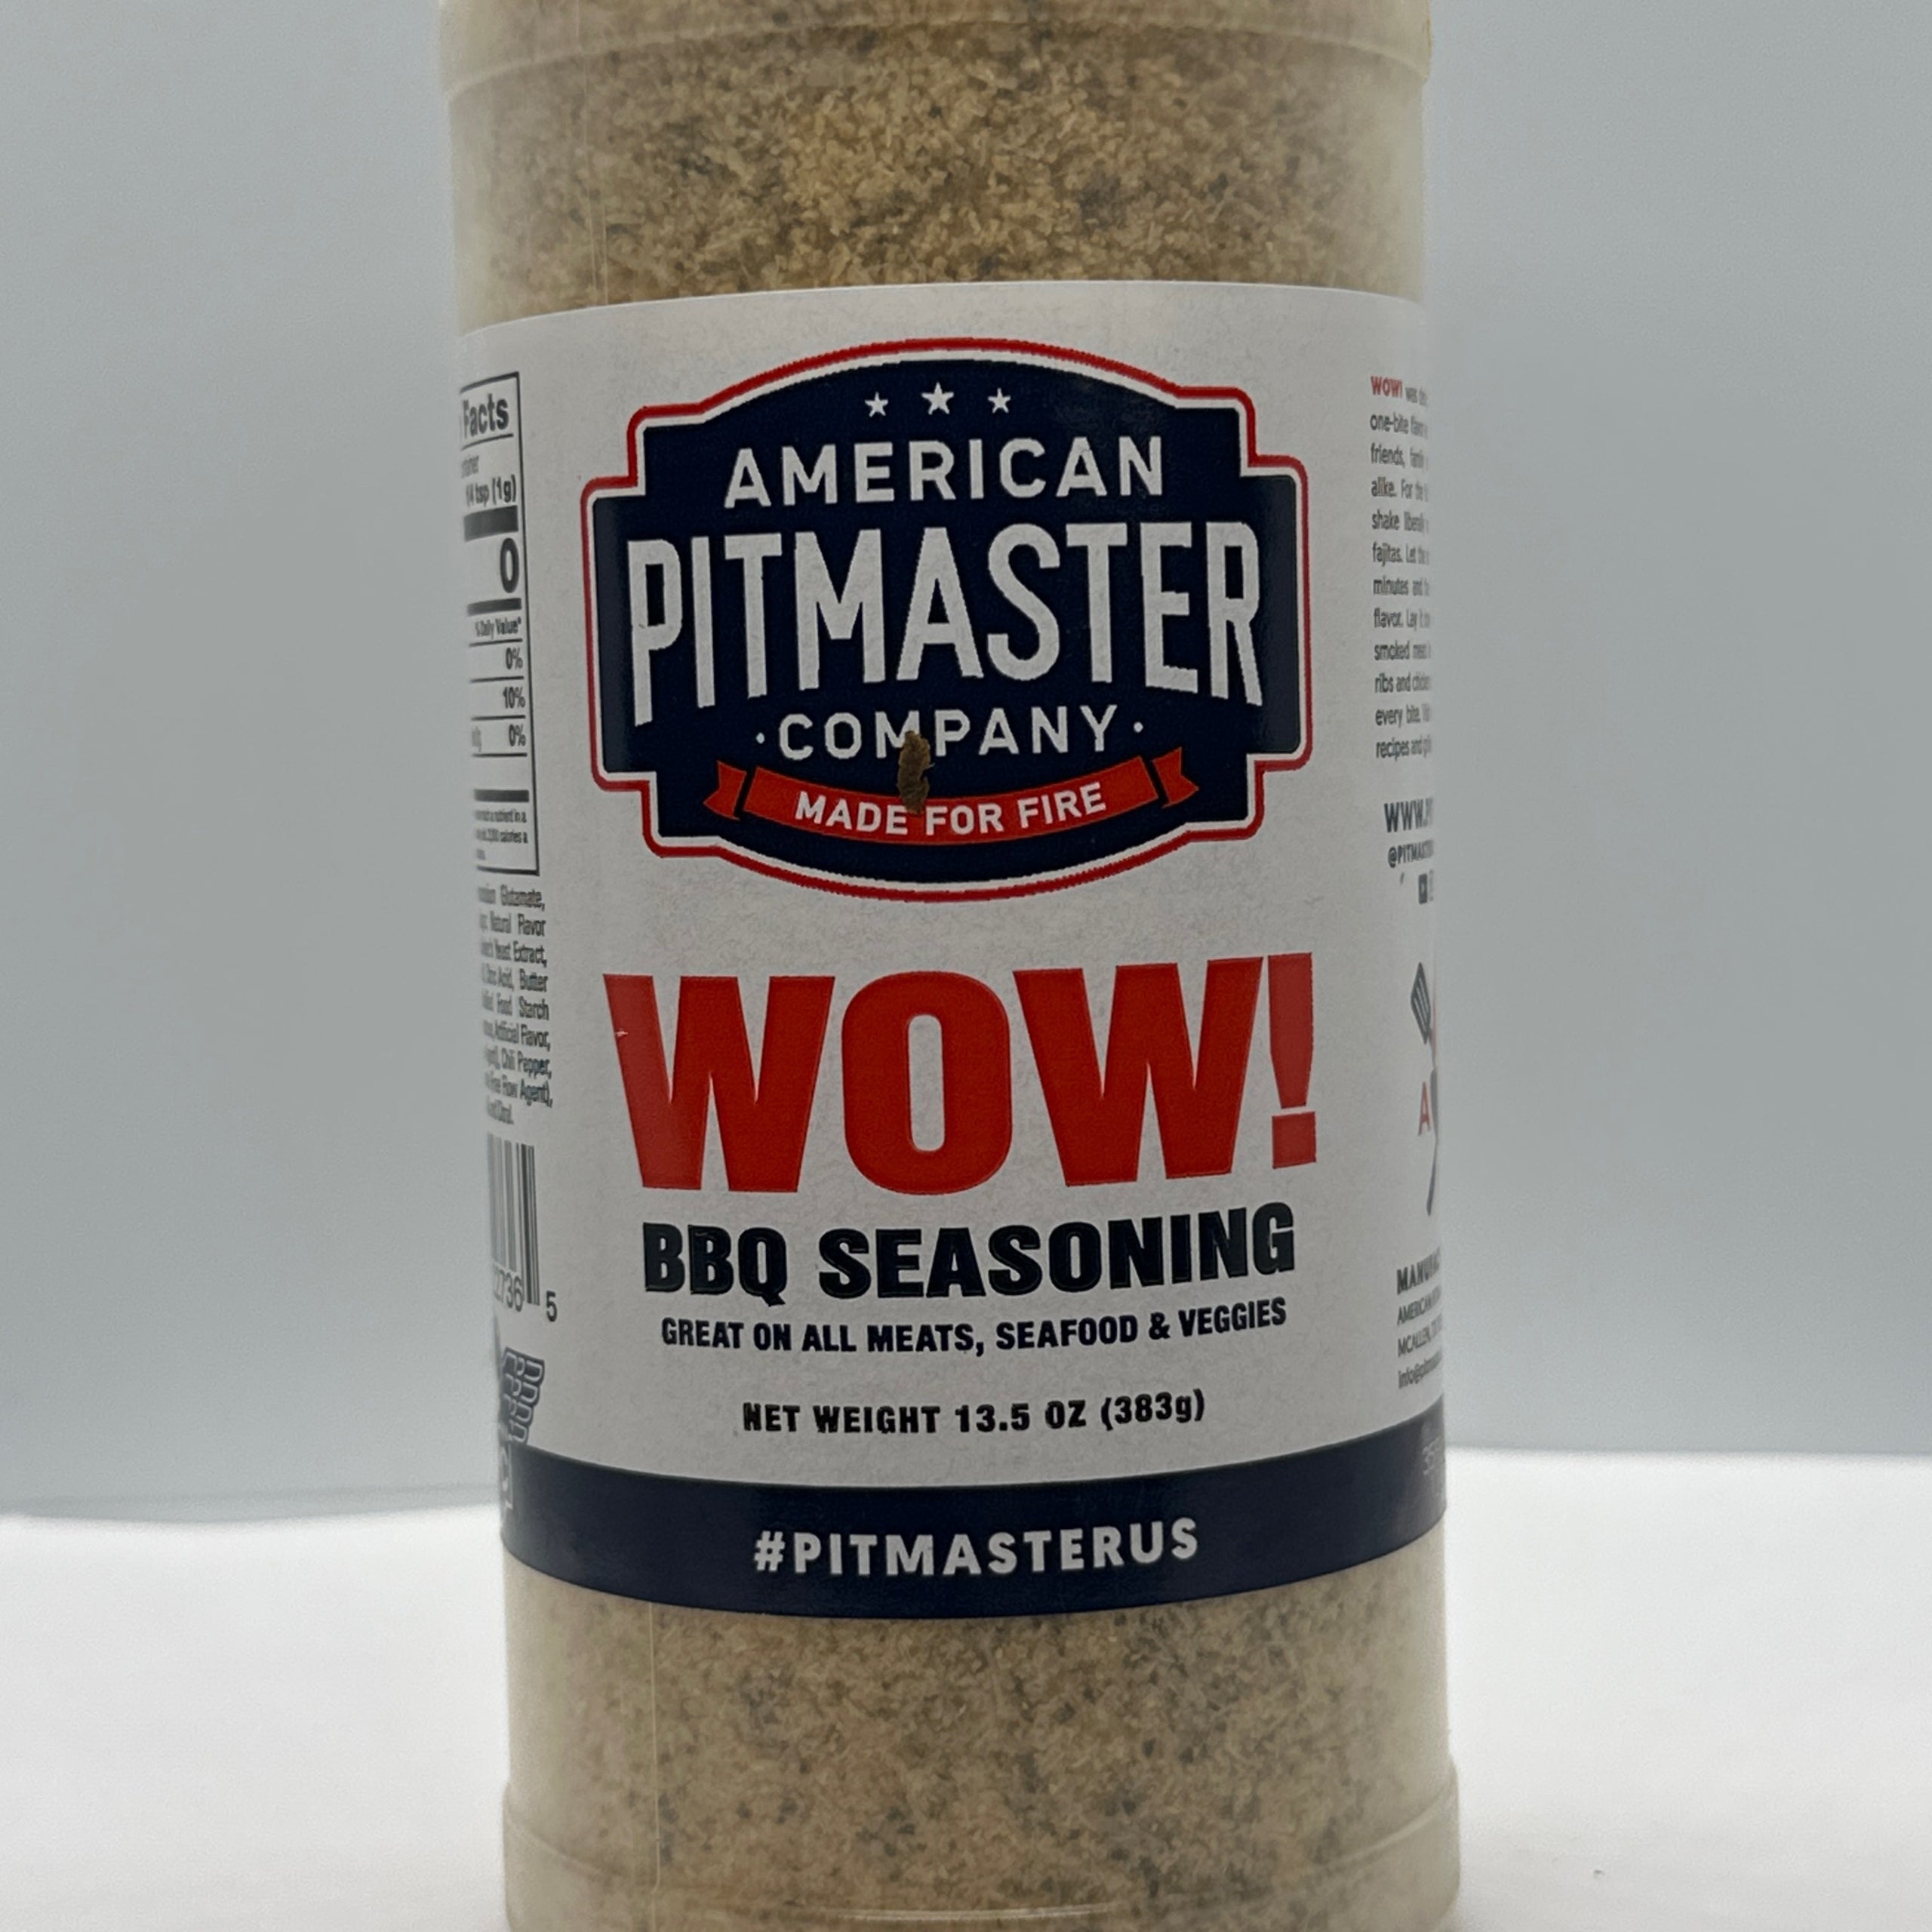 American Pitmaster Company Wow! BBQ Seasoning - Champion BBQ Supply